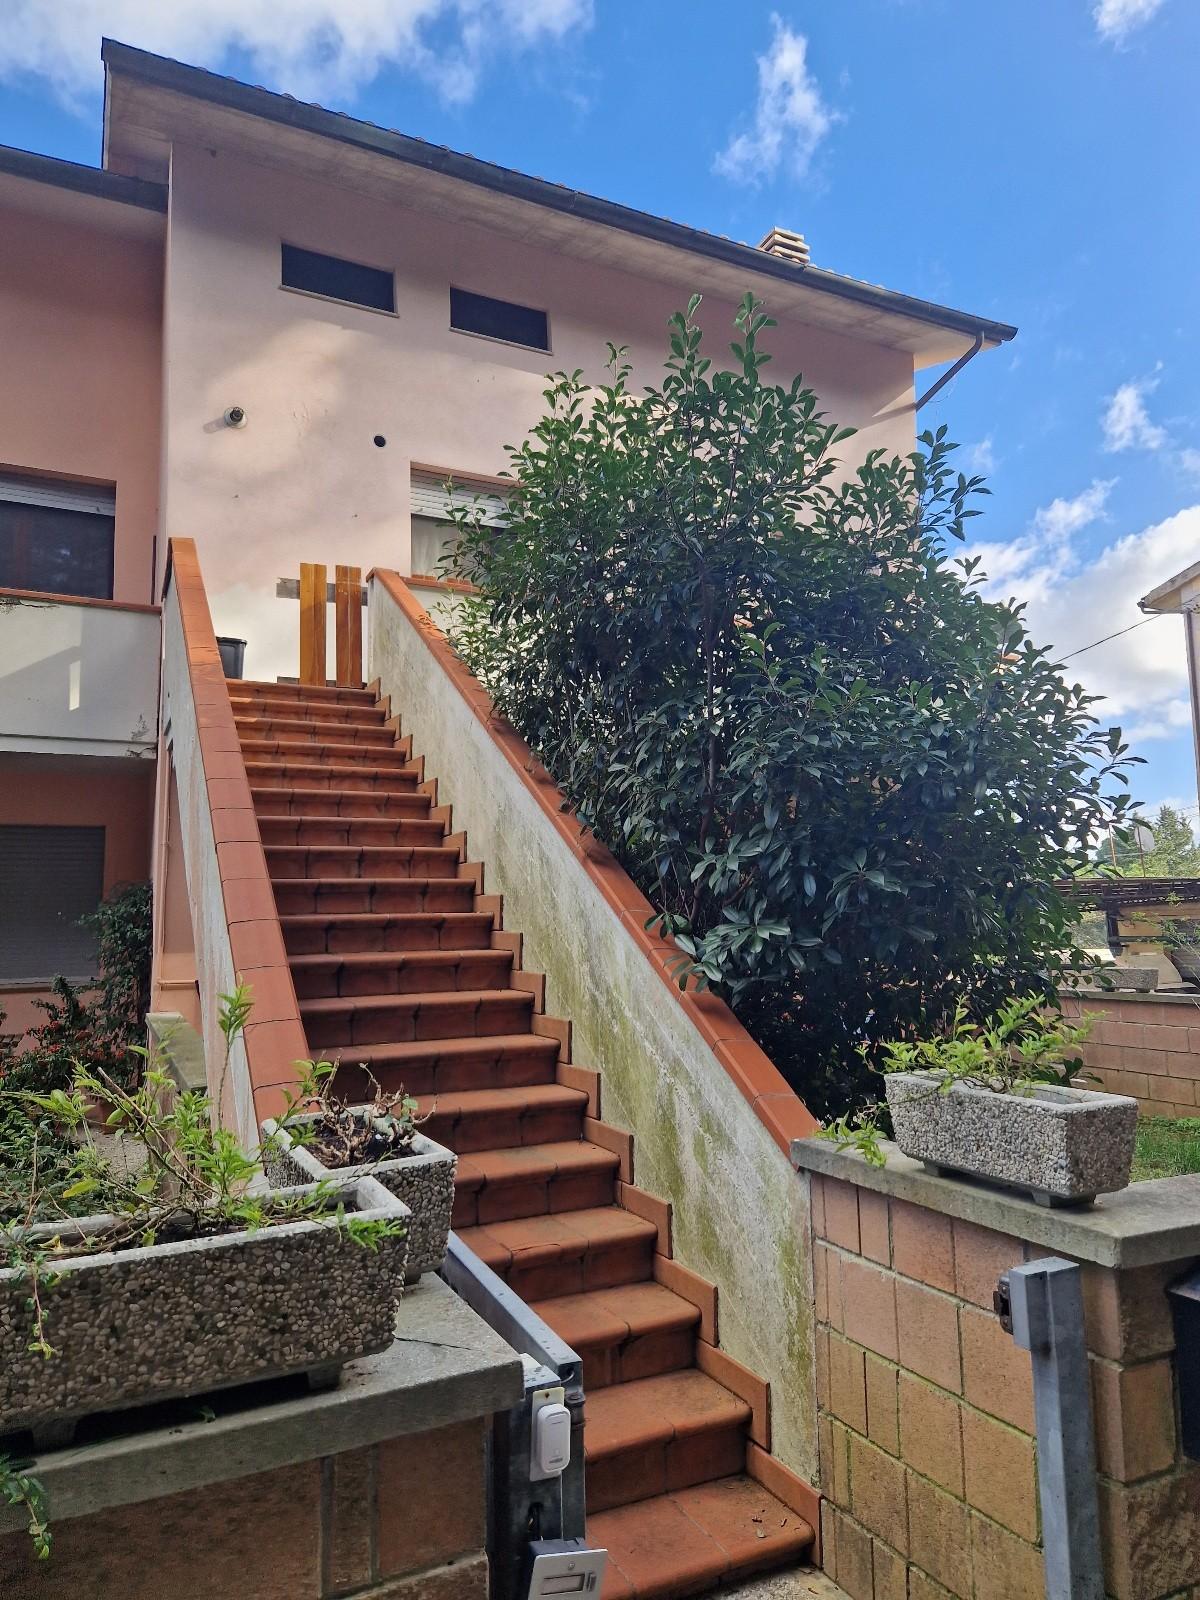 Apartment for sale in Crespina Lorenzana (PI)